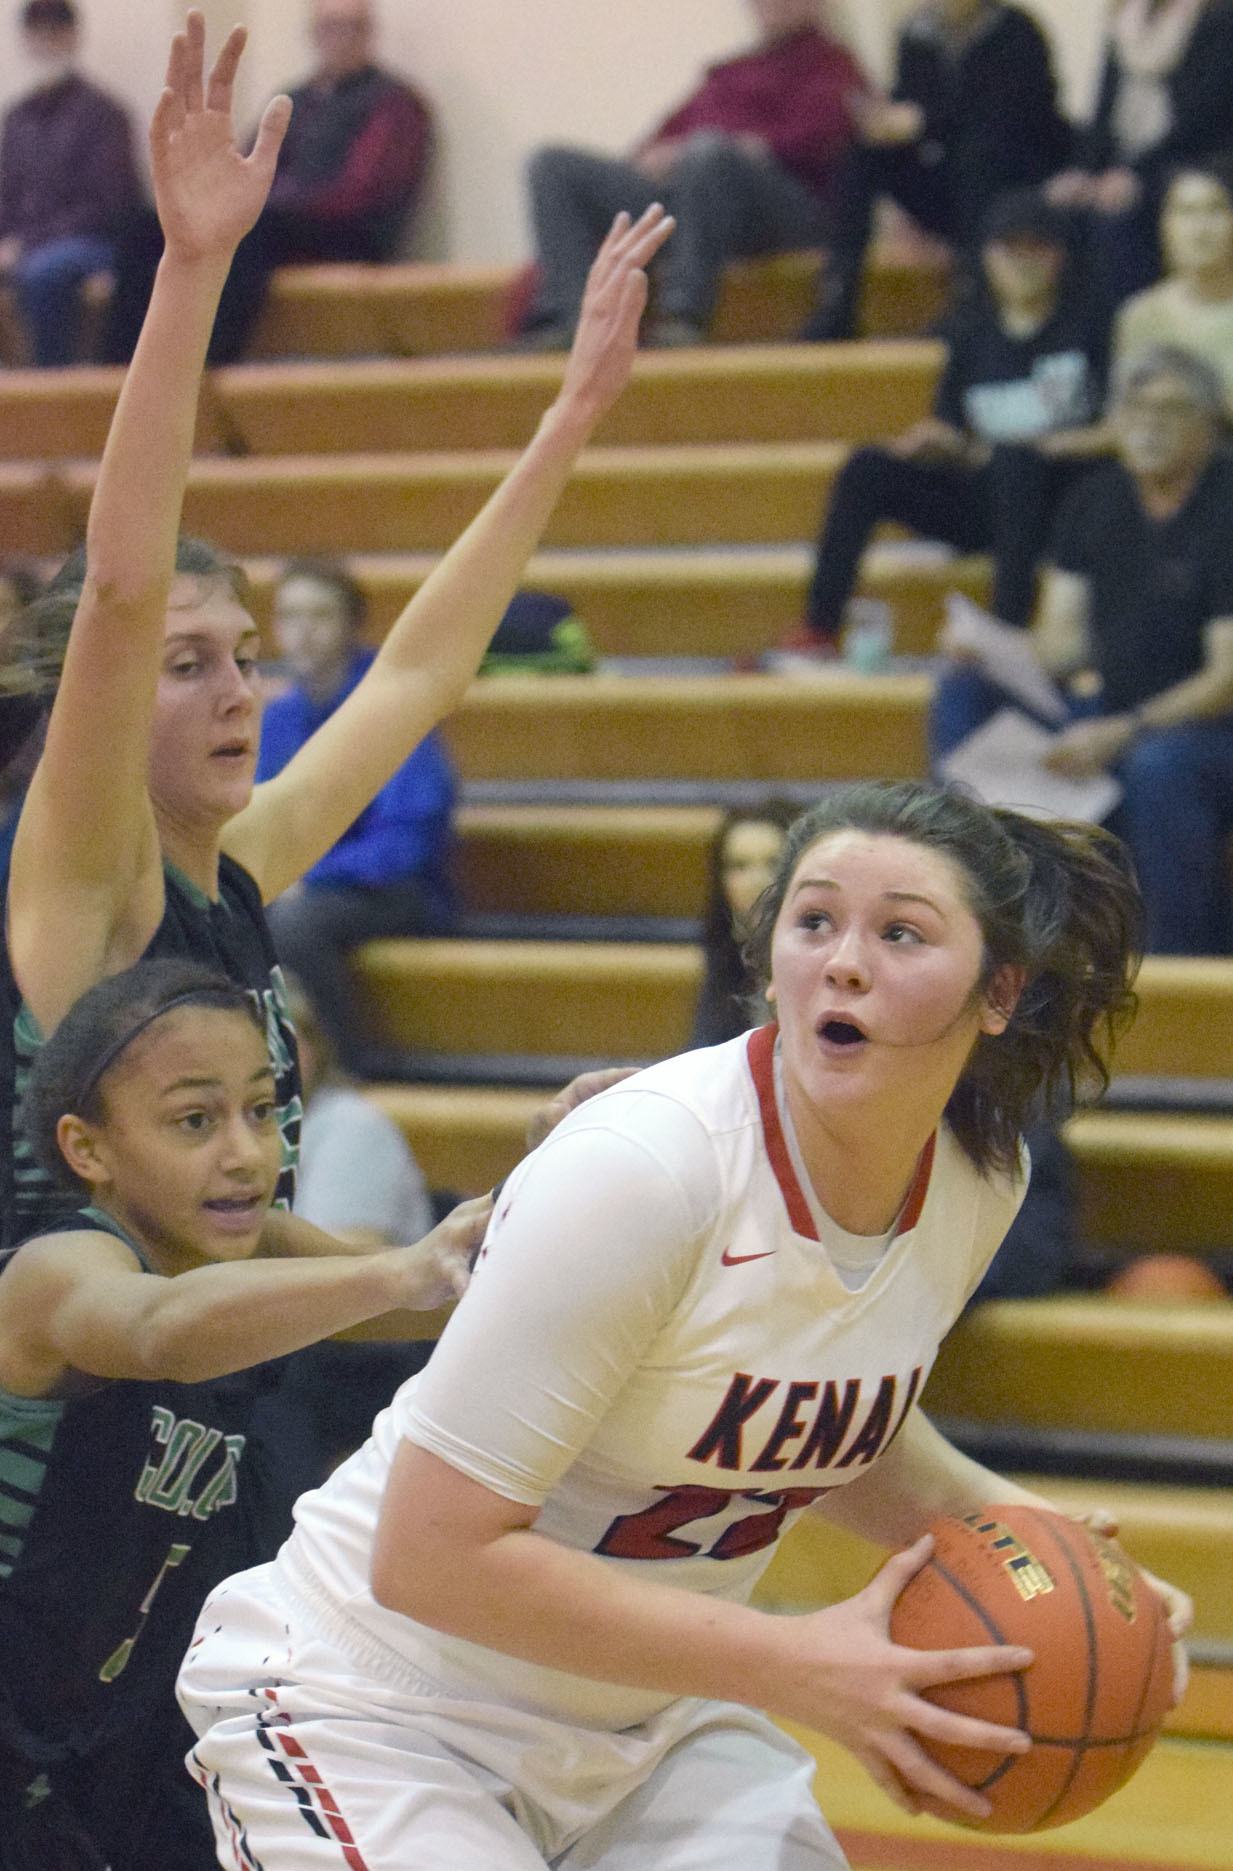 Colony sweeps Kenai in basketball